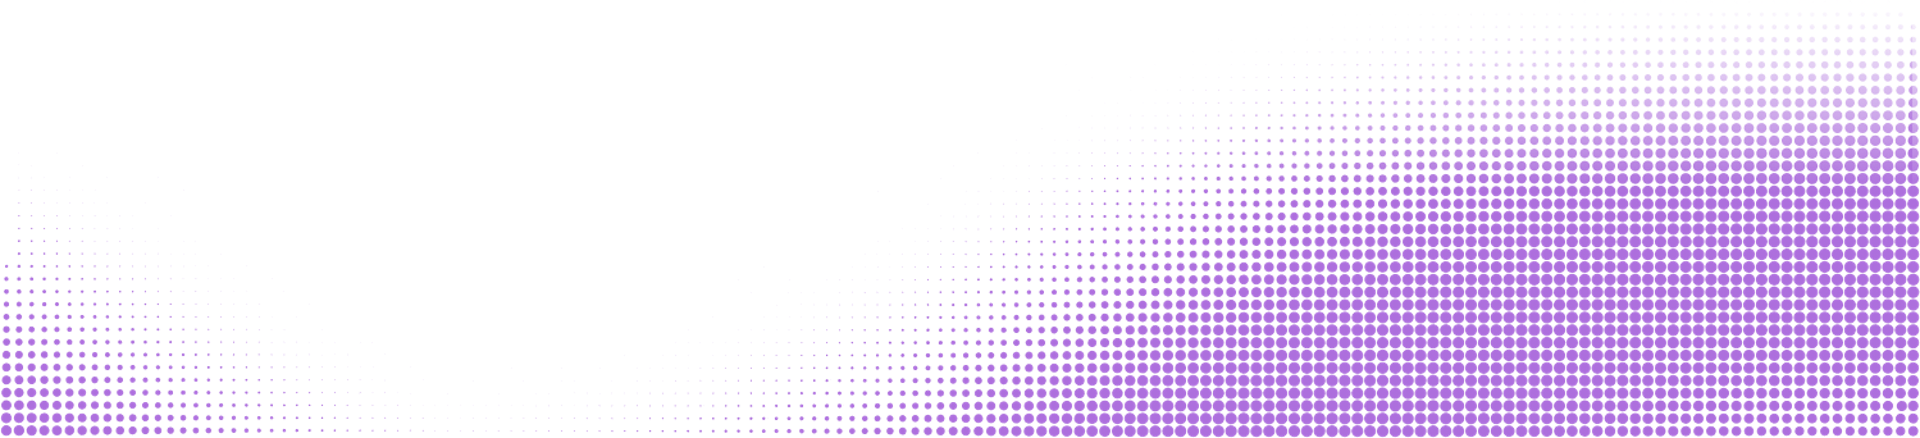 dots pattern